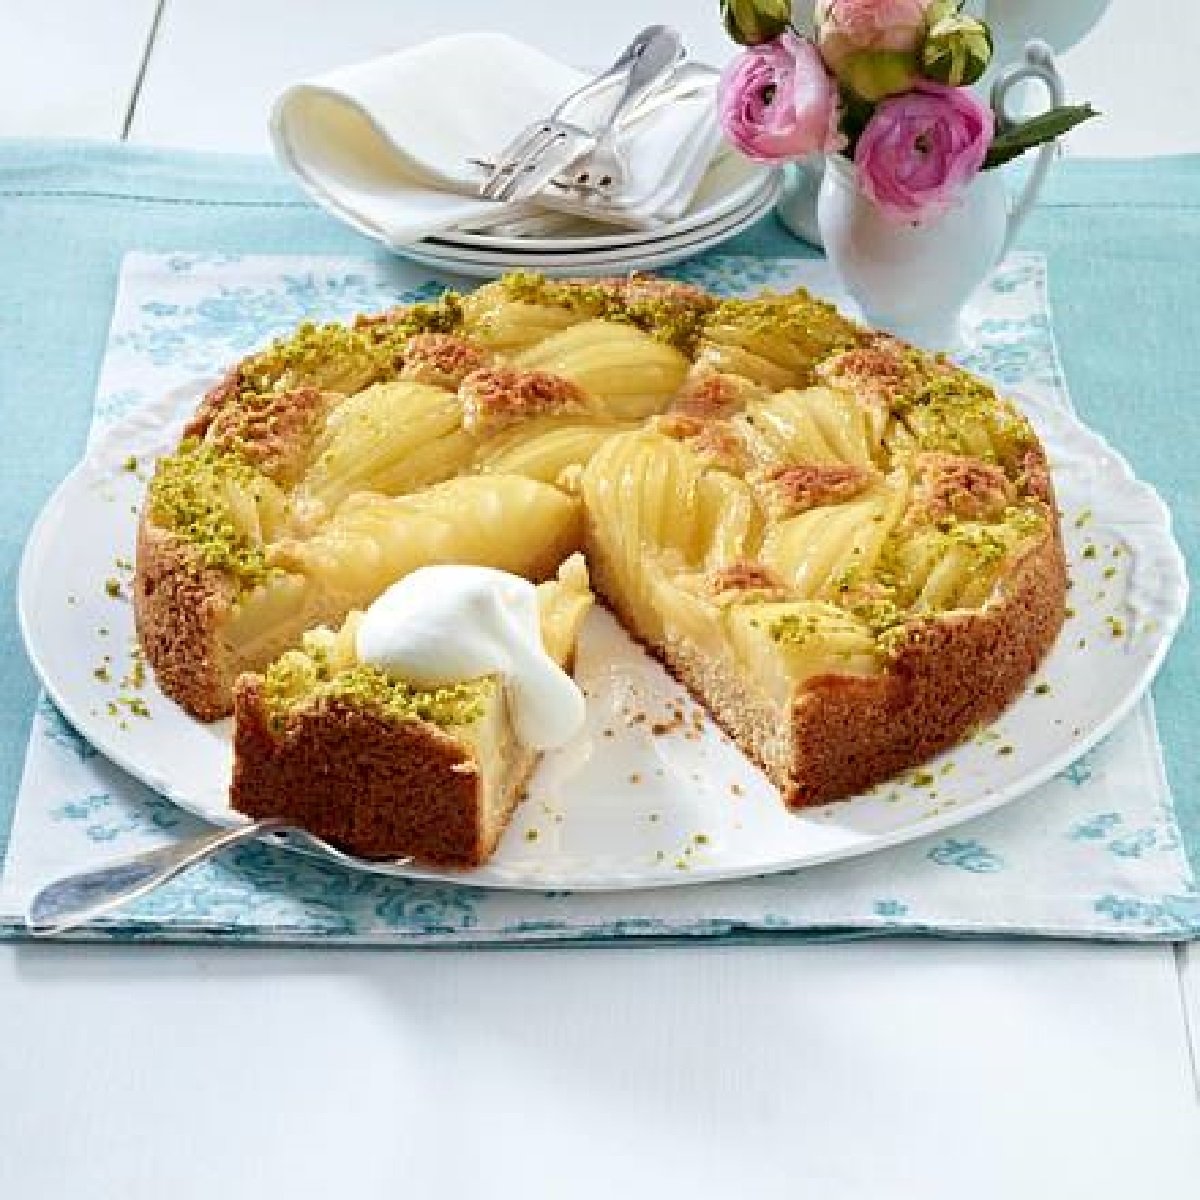 delicious "pear cake" recipe - Caramel Pear Cake